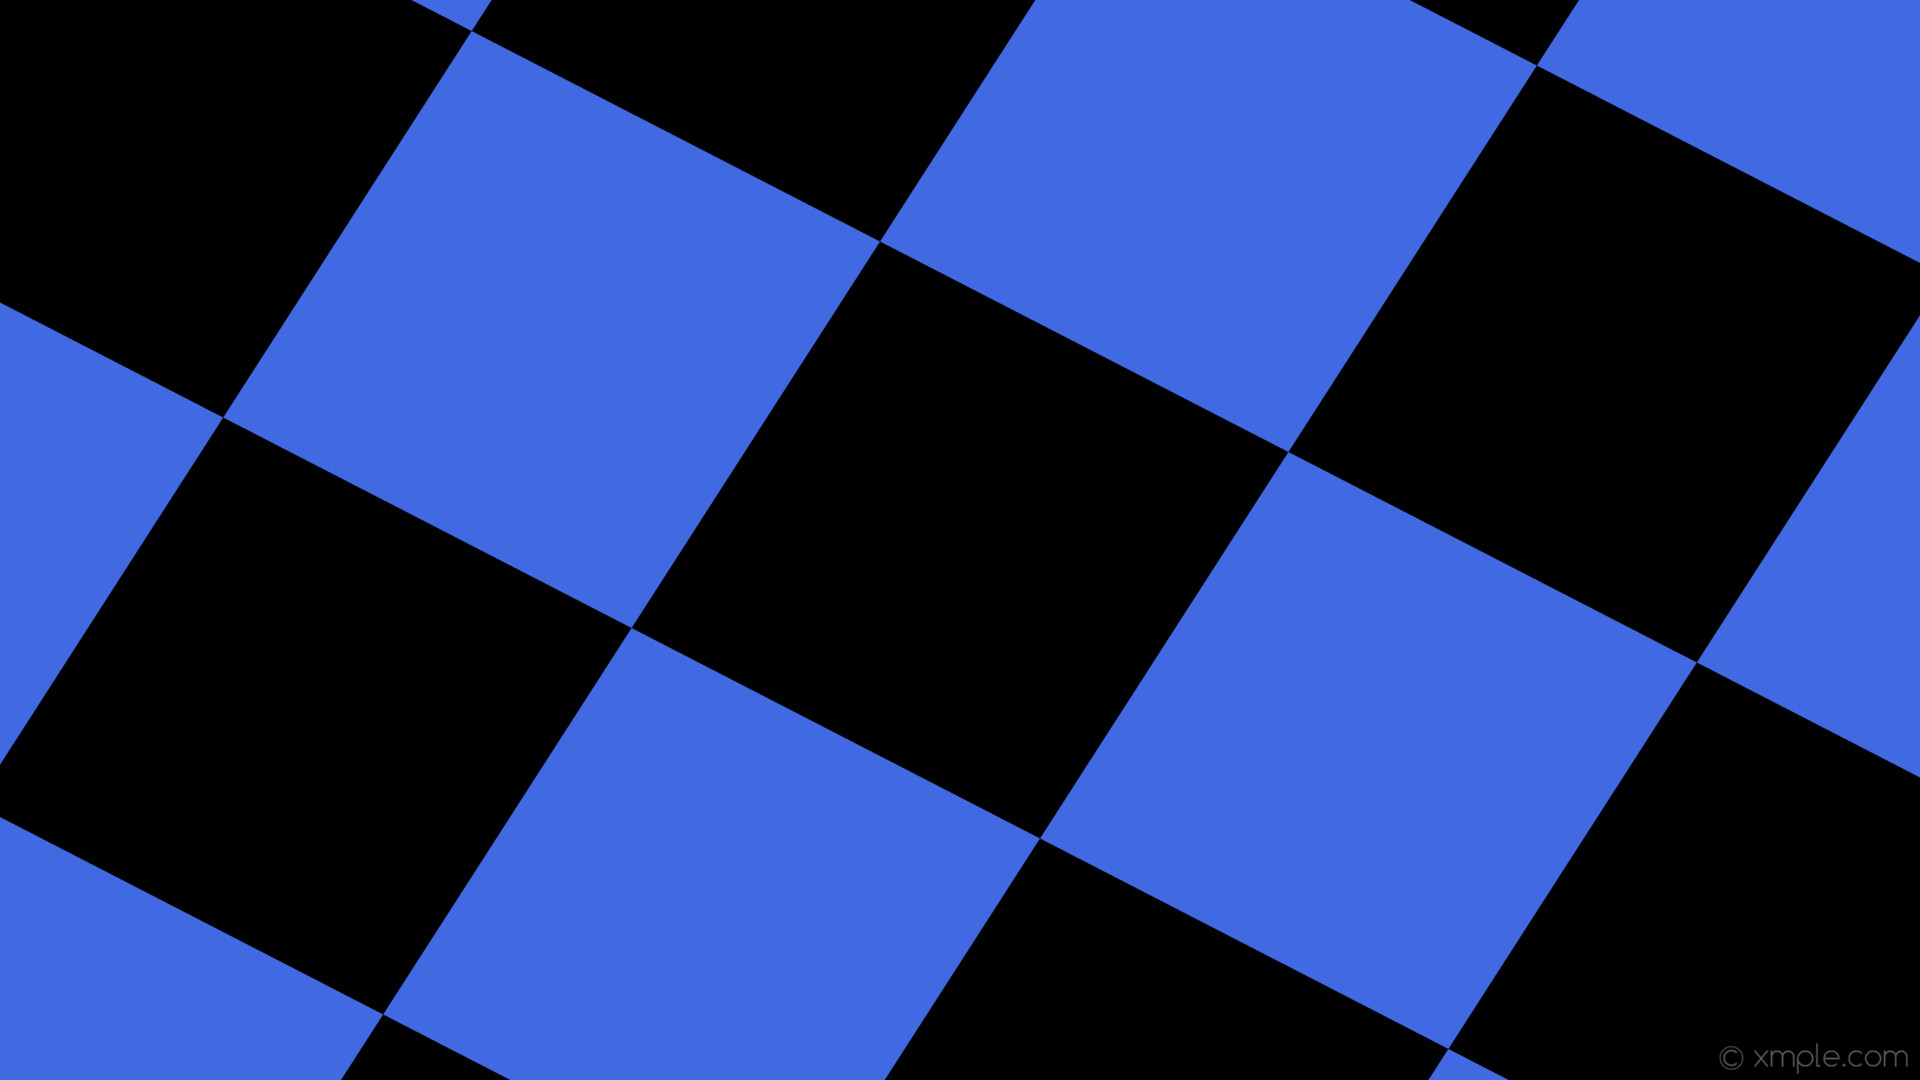 1920x1080 wallpaper rhombus lozenge blue diamond black royal blue #000000 #4169e1 15Â°  680px 618px